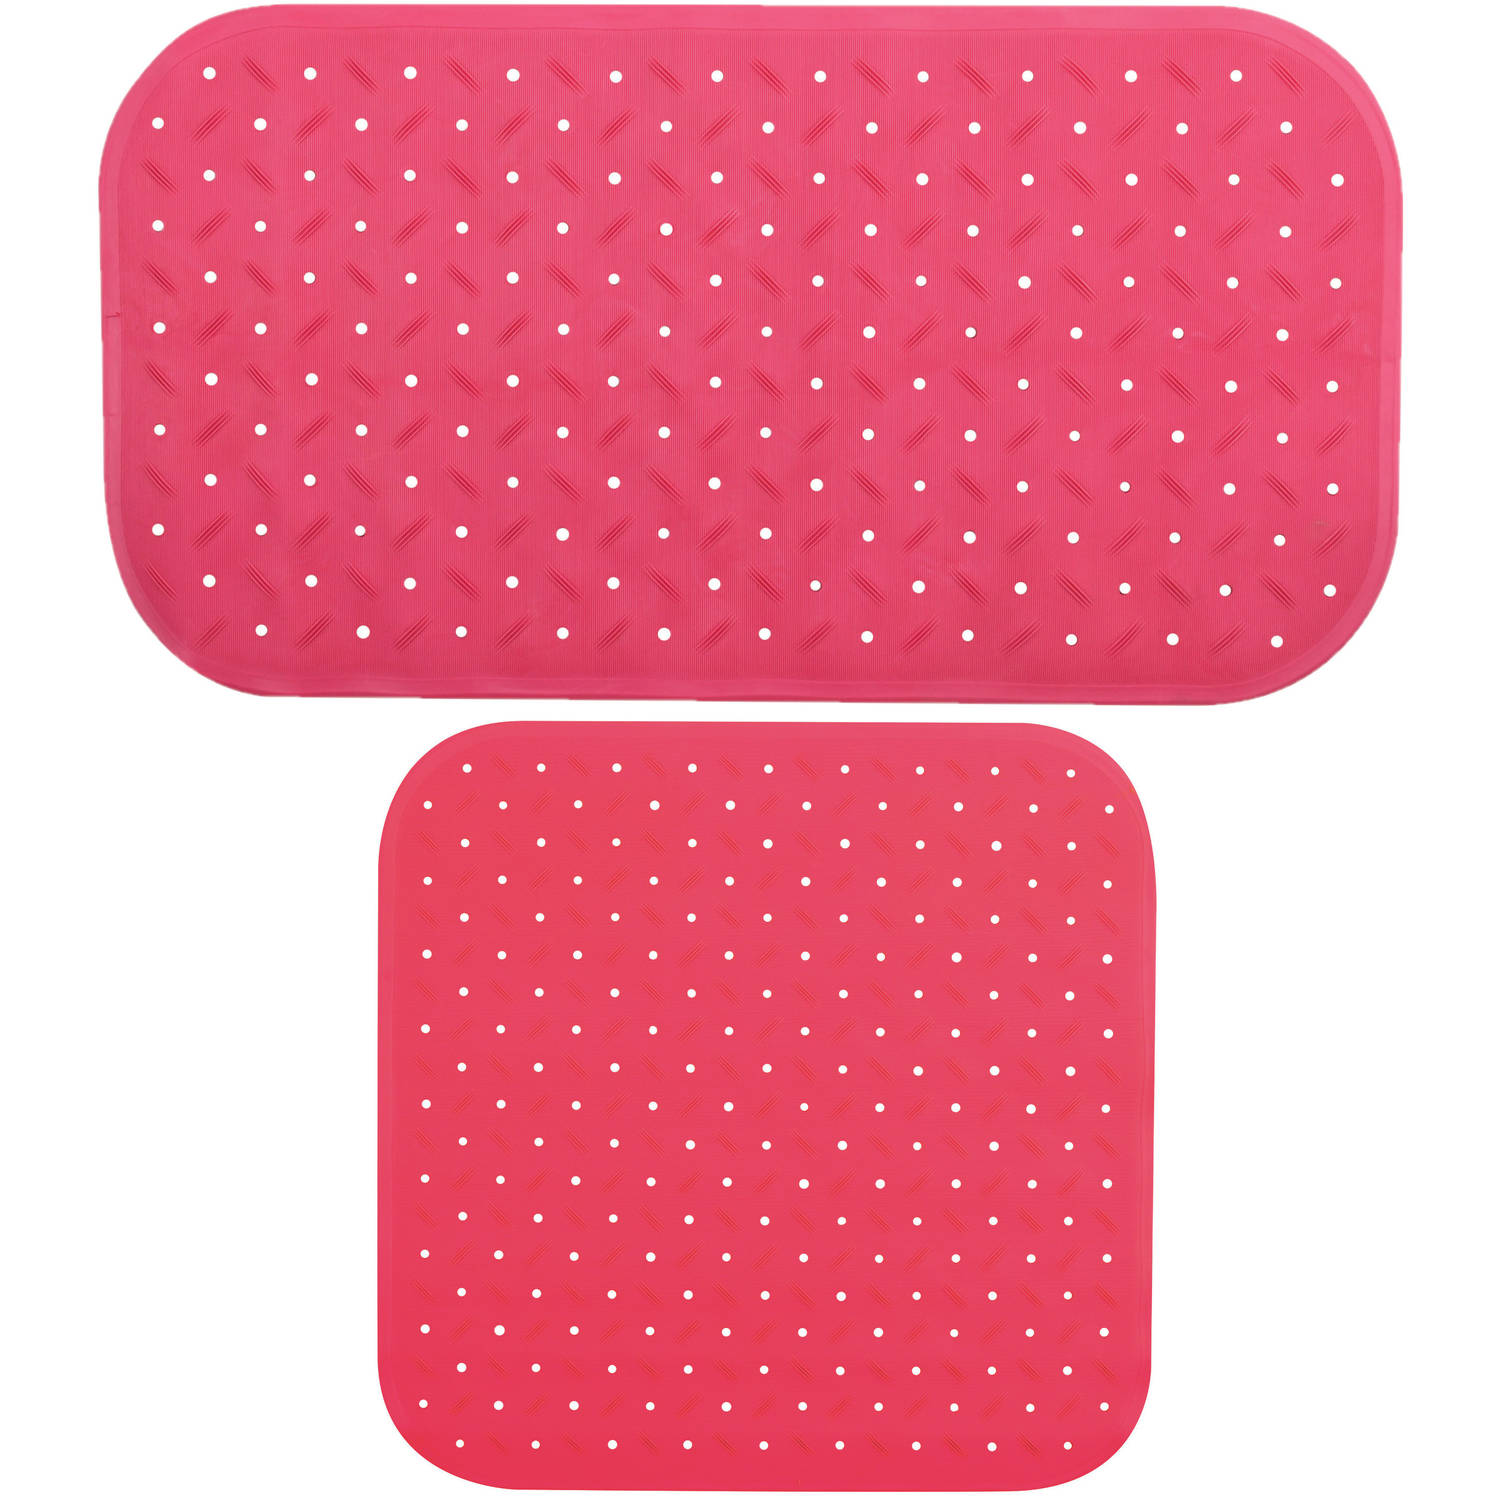 MSV Douche-bad anti-slip matten set badkamer rubber 2x stuks fuchsia roze 2 formaten Badmatjes